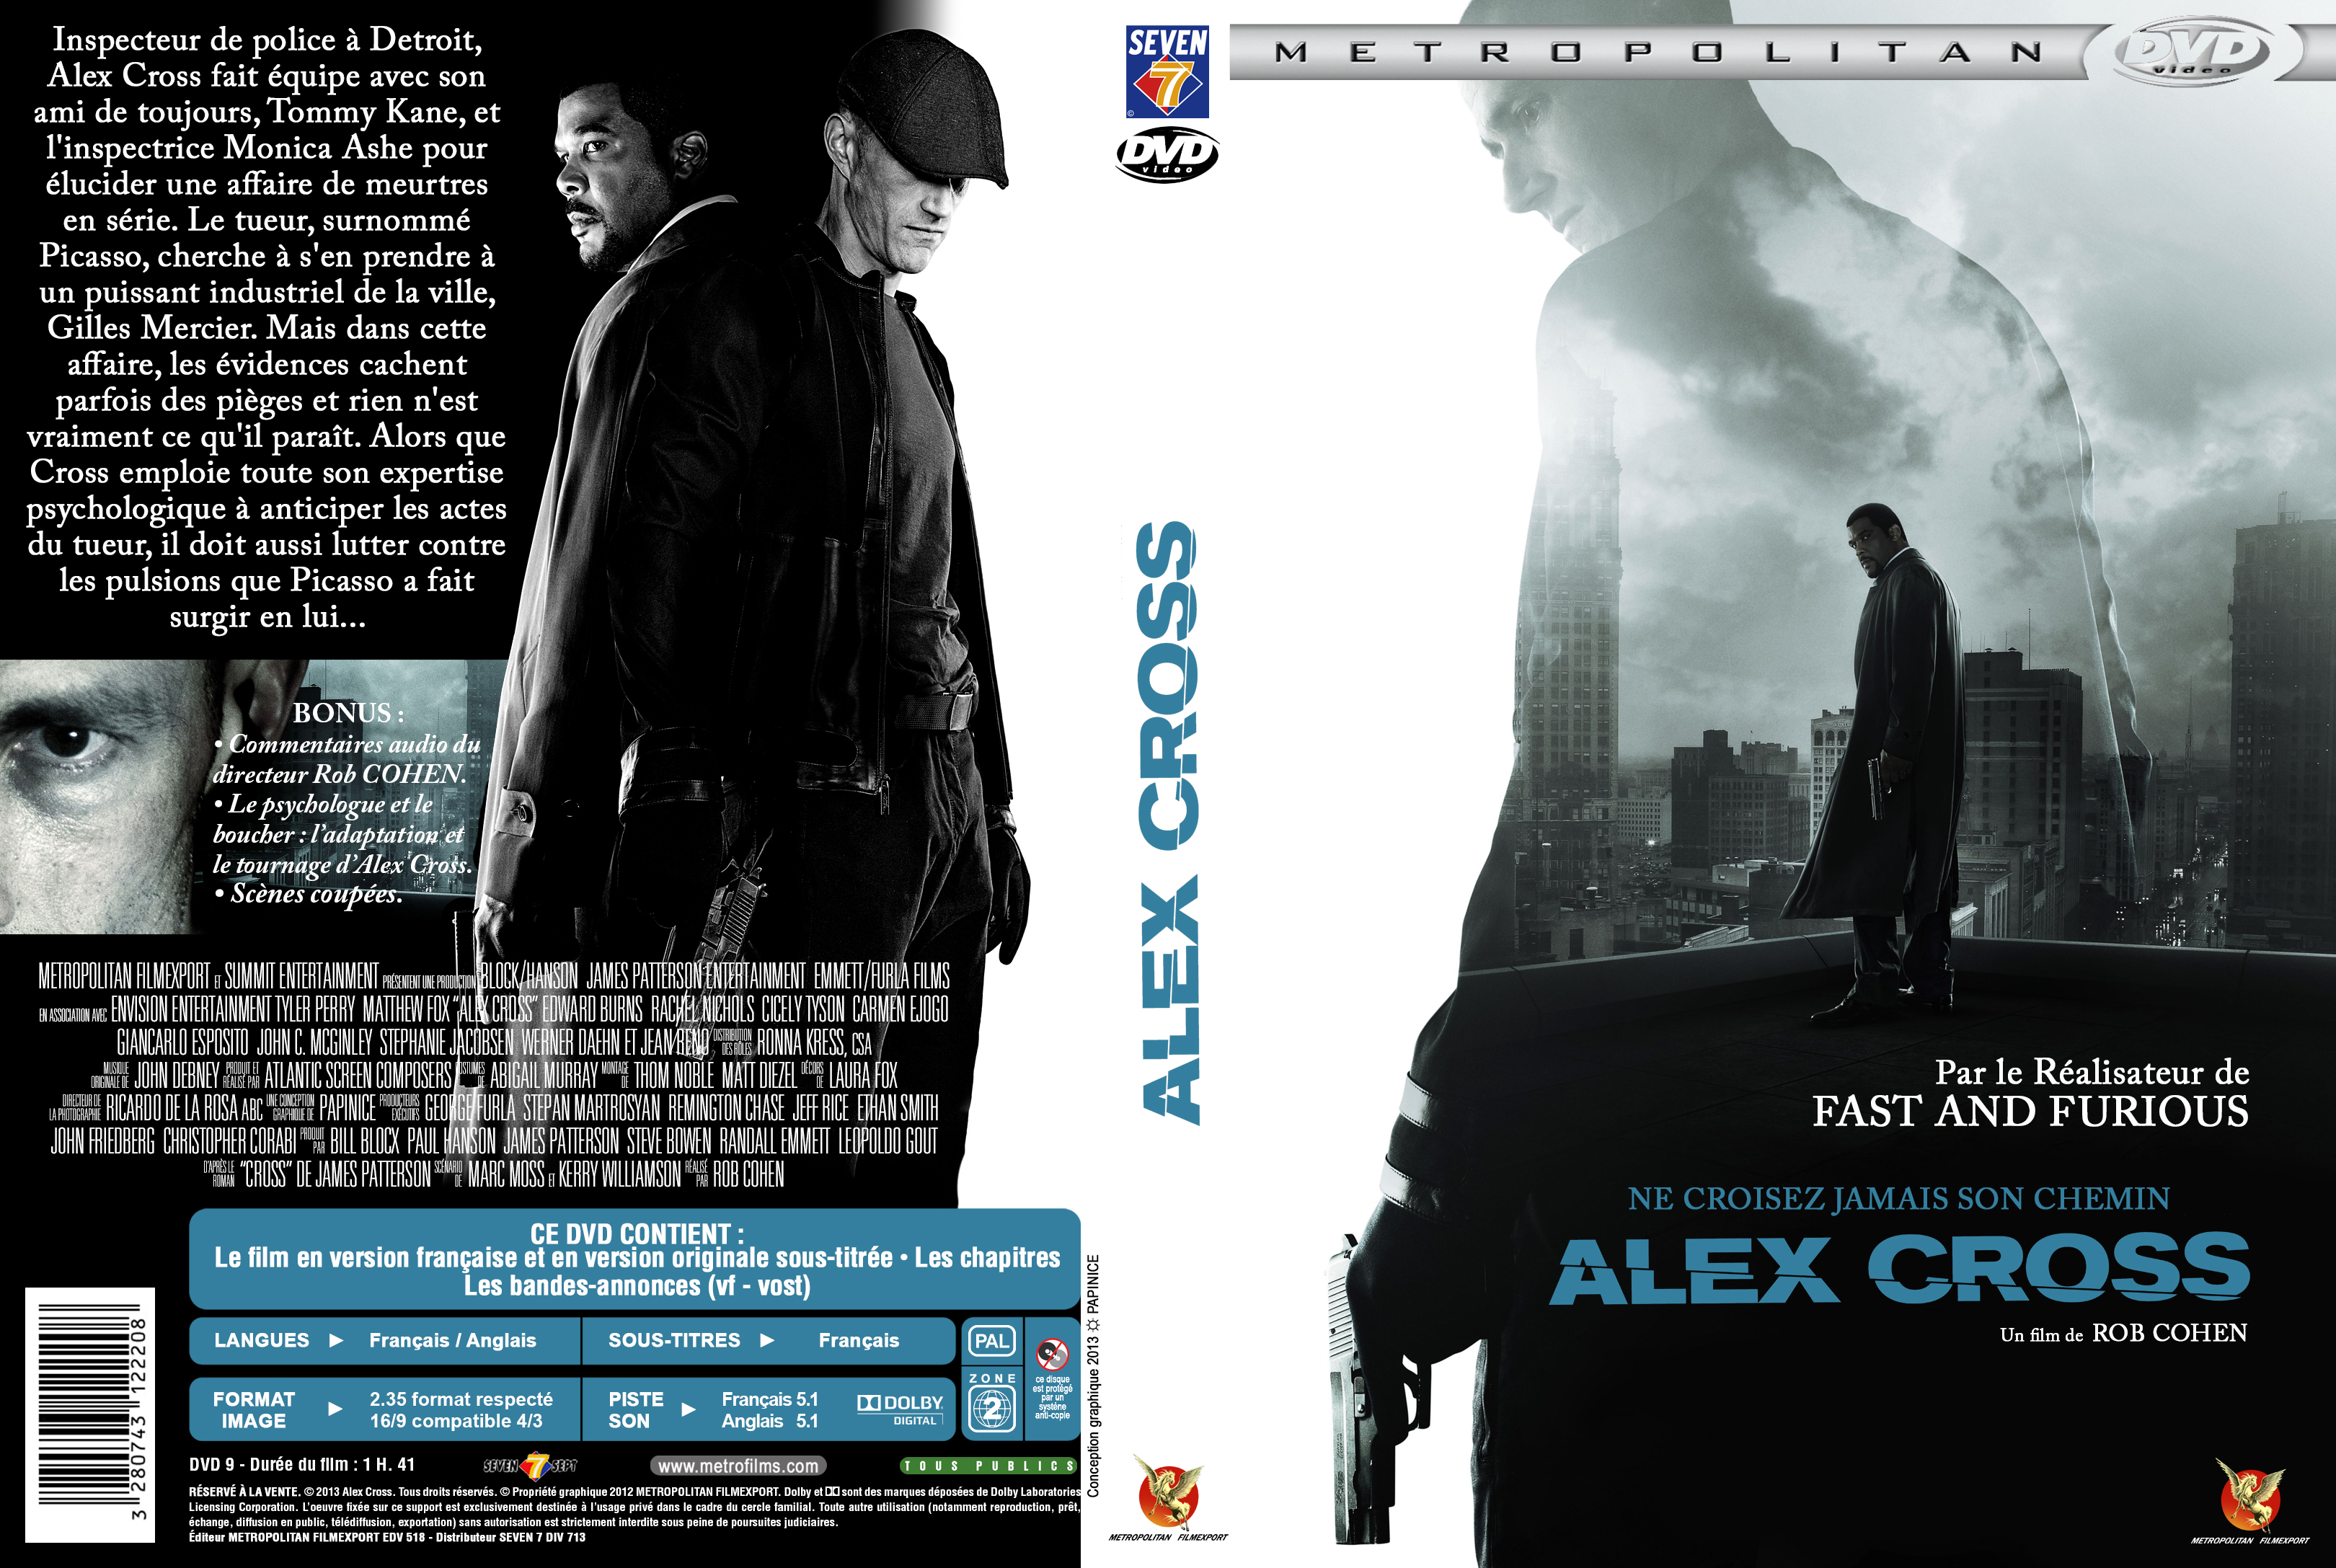 Jaquette DVD Alex Cross custom